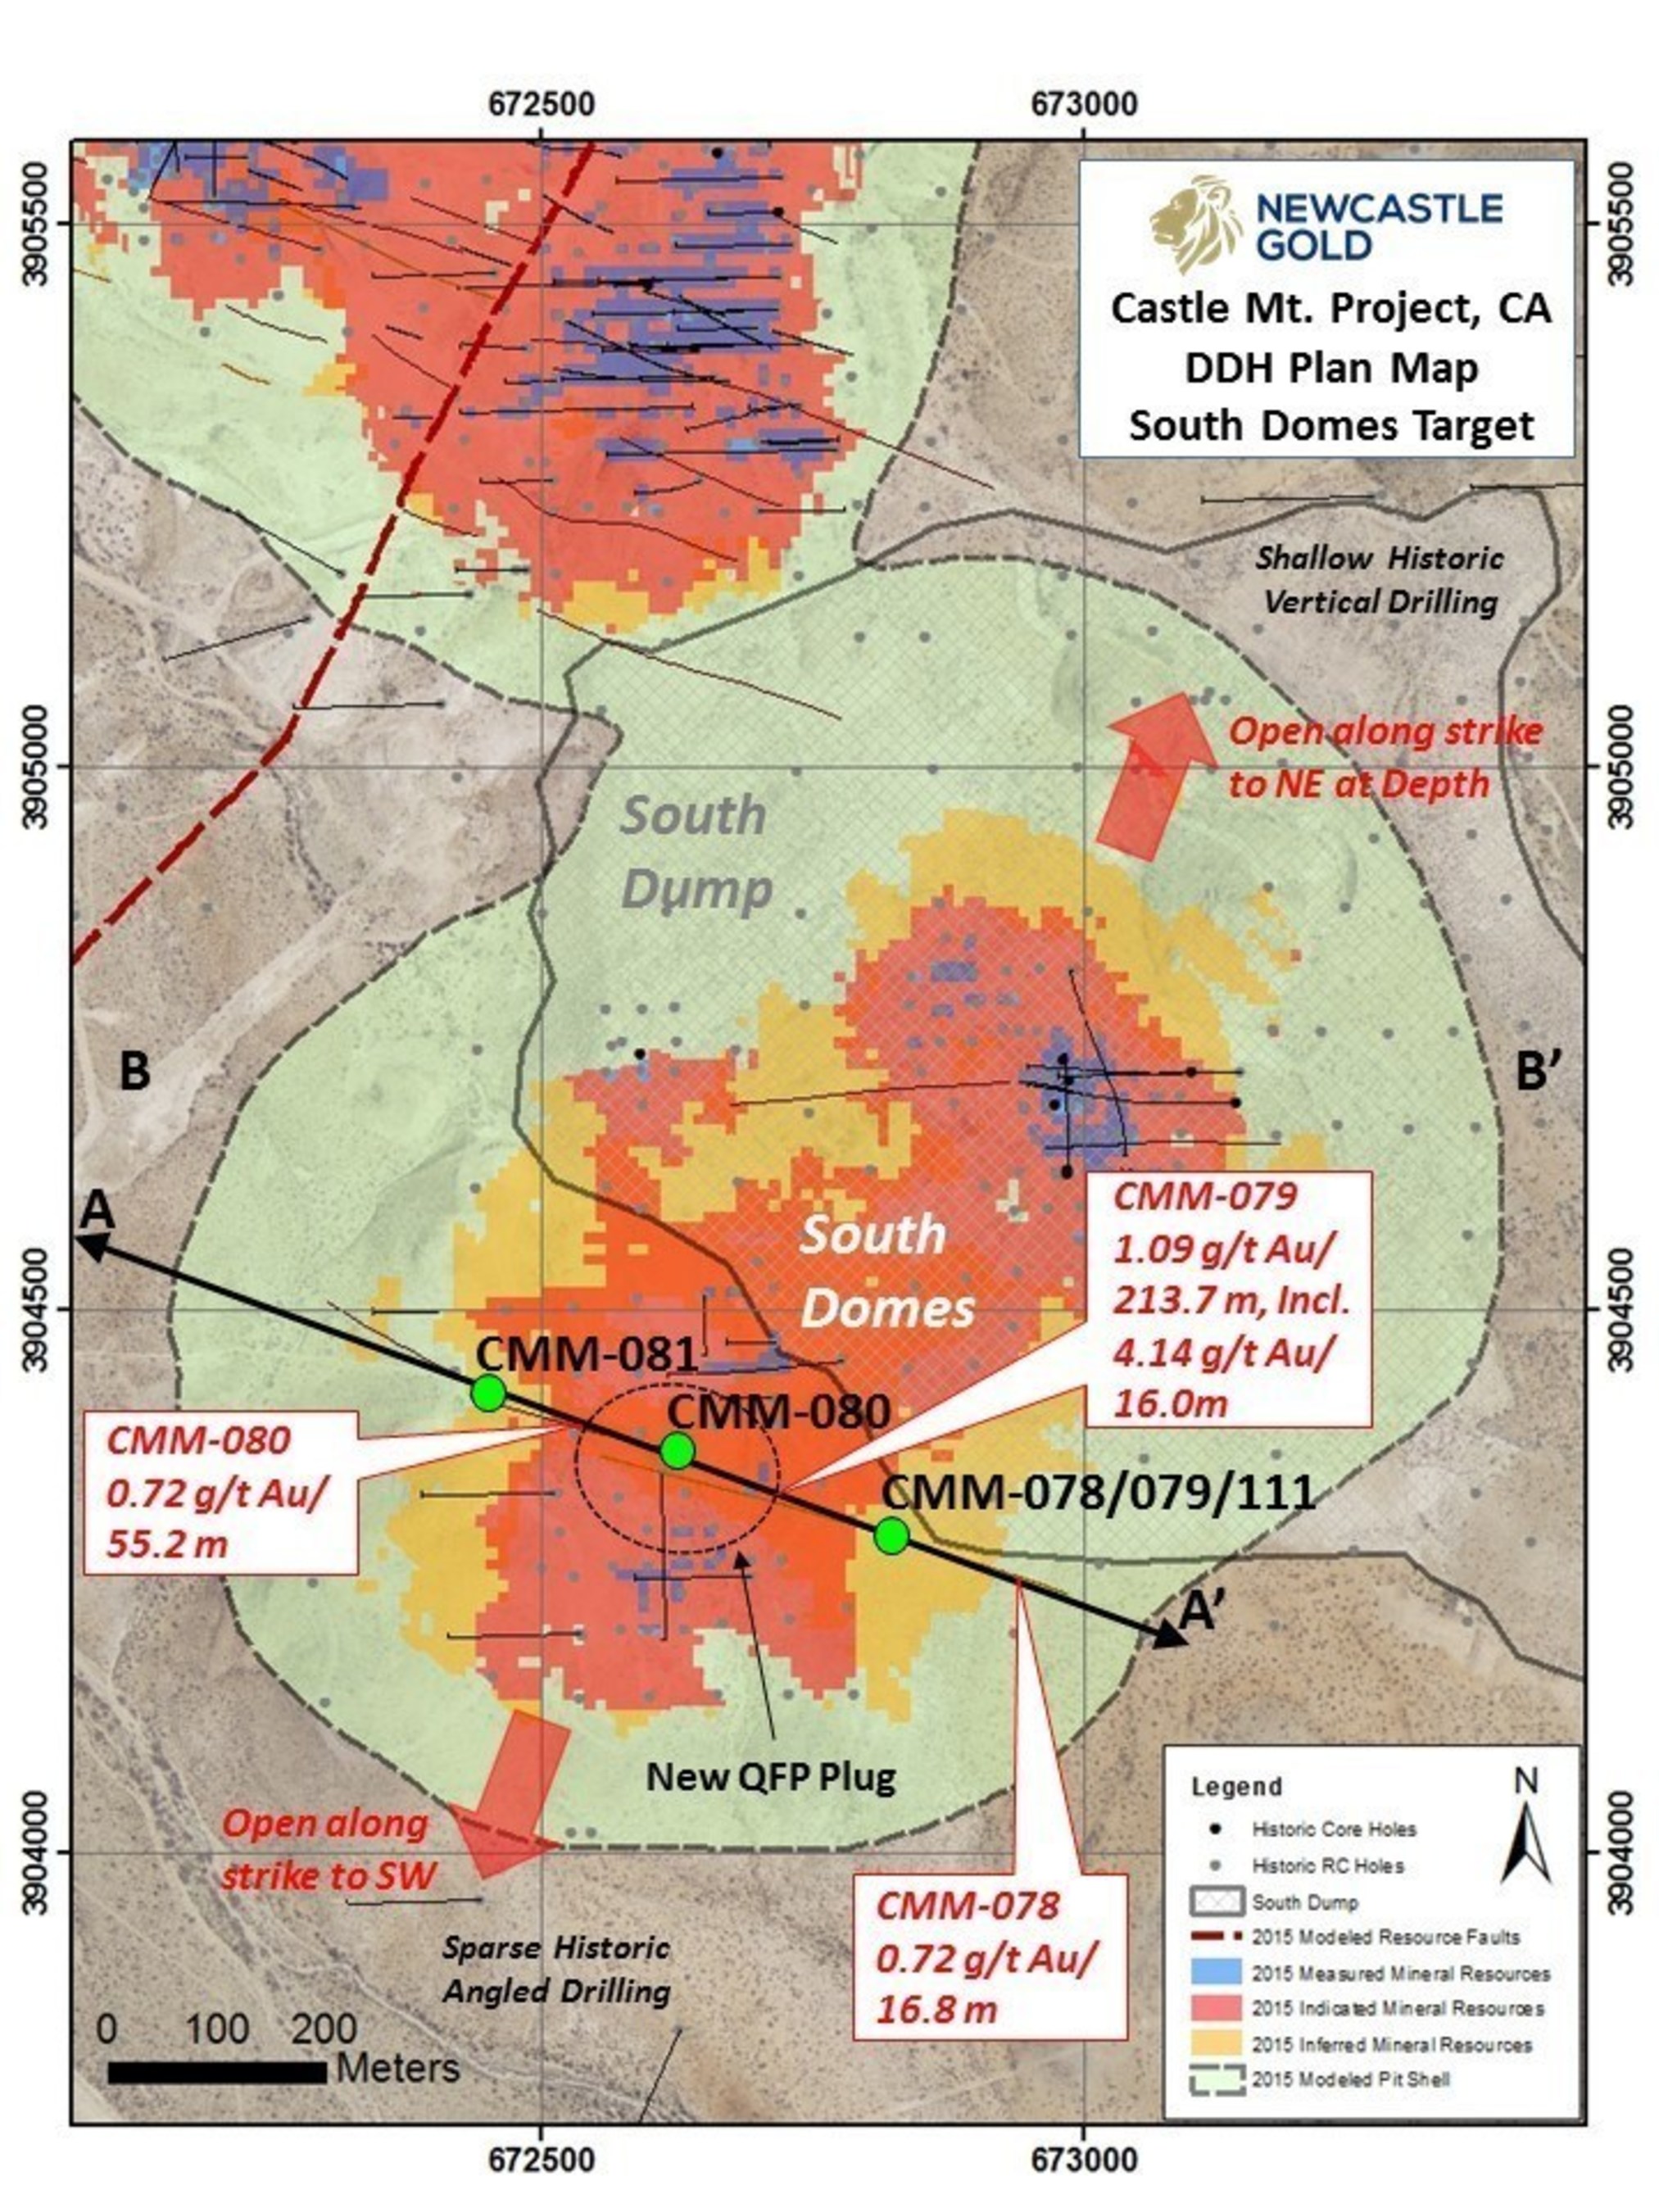 Castle Mt. Project, DHH Plan Map, South Domes Target